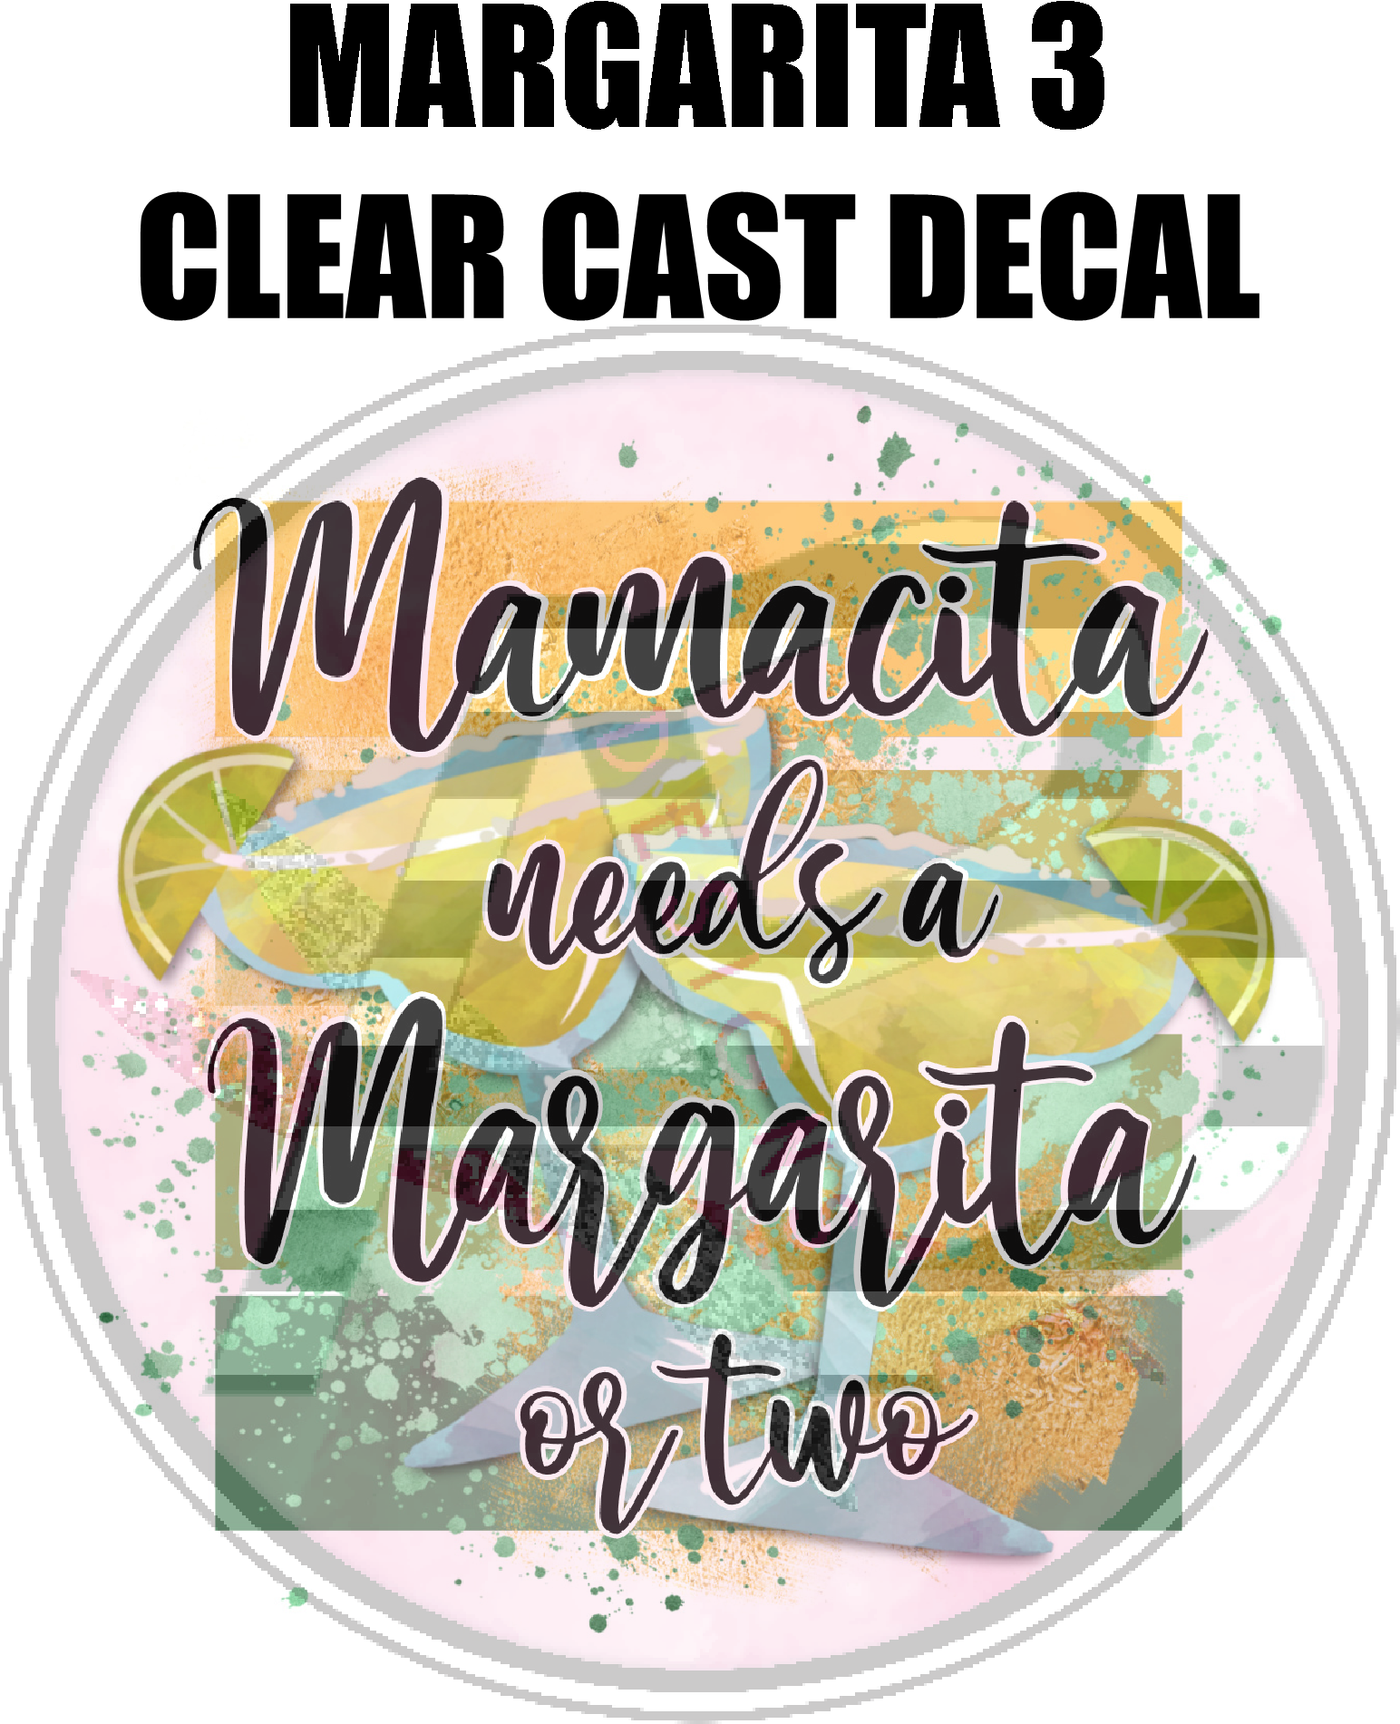 Margarita 3 - Clear Cast Decal